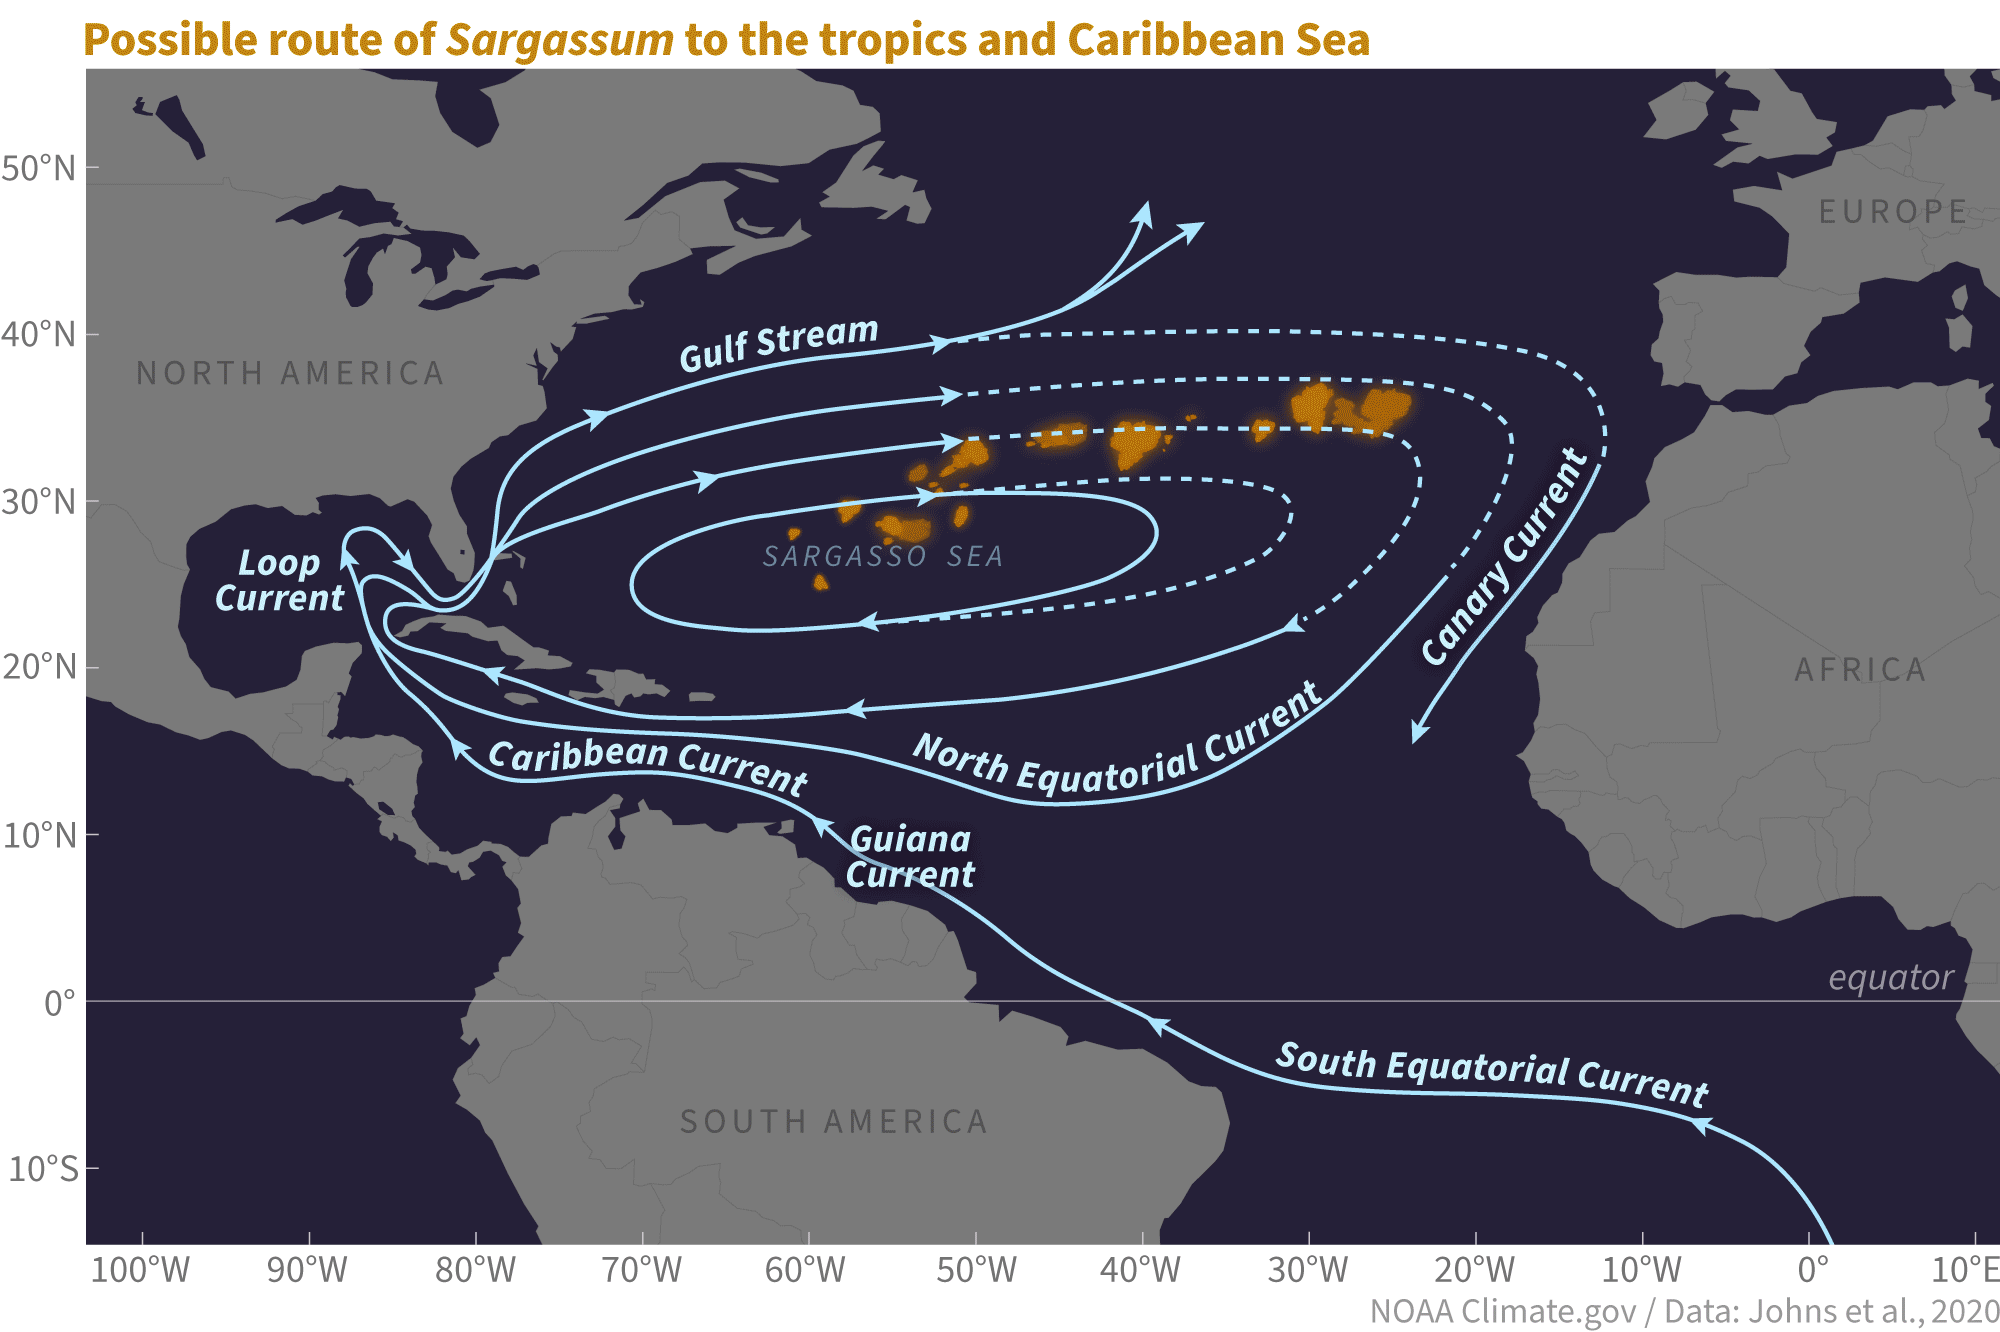 Animated schematic tracing pathway of Sargassum dispersal across North Atlantic